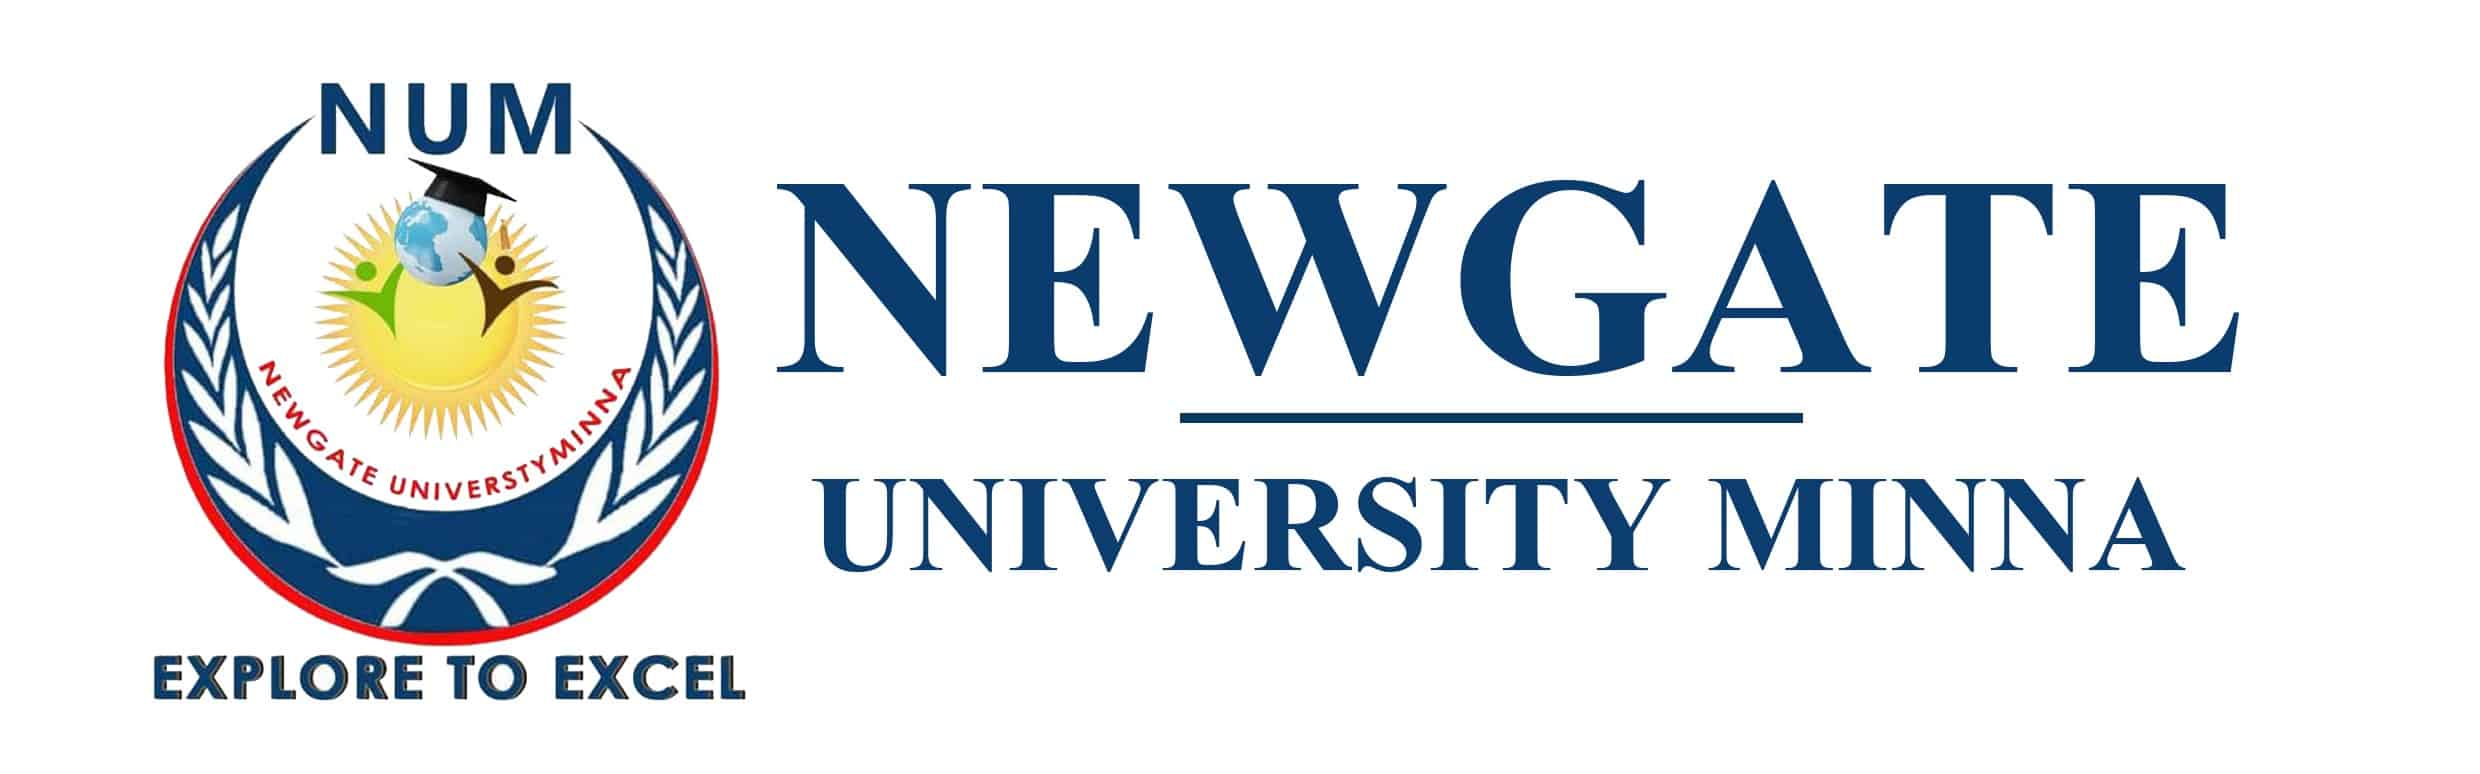 Newgate University Minna (NUM) Matriculation Ceremony